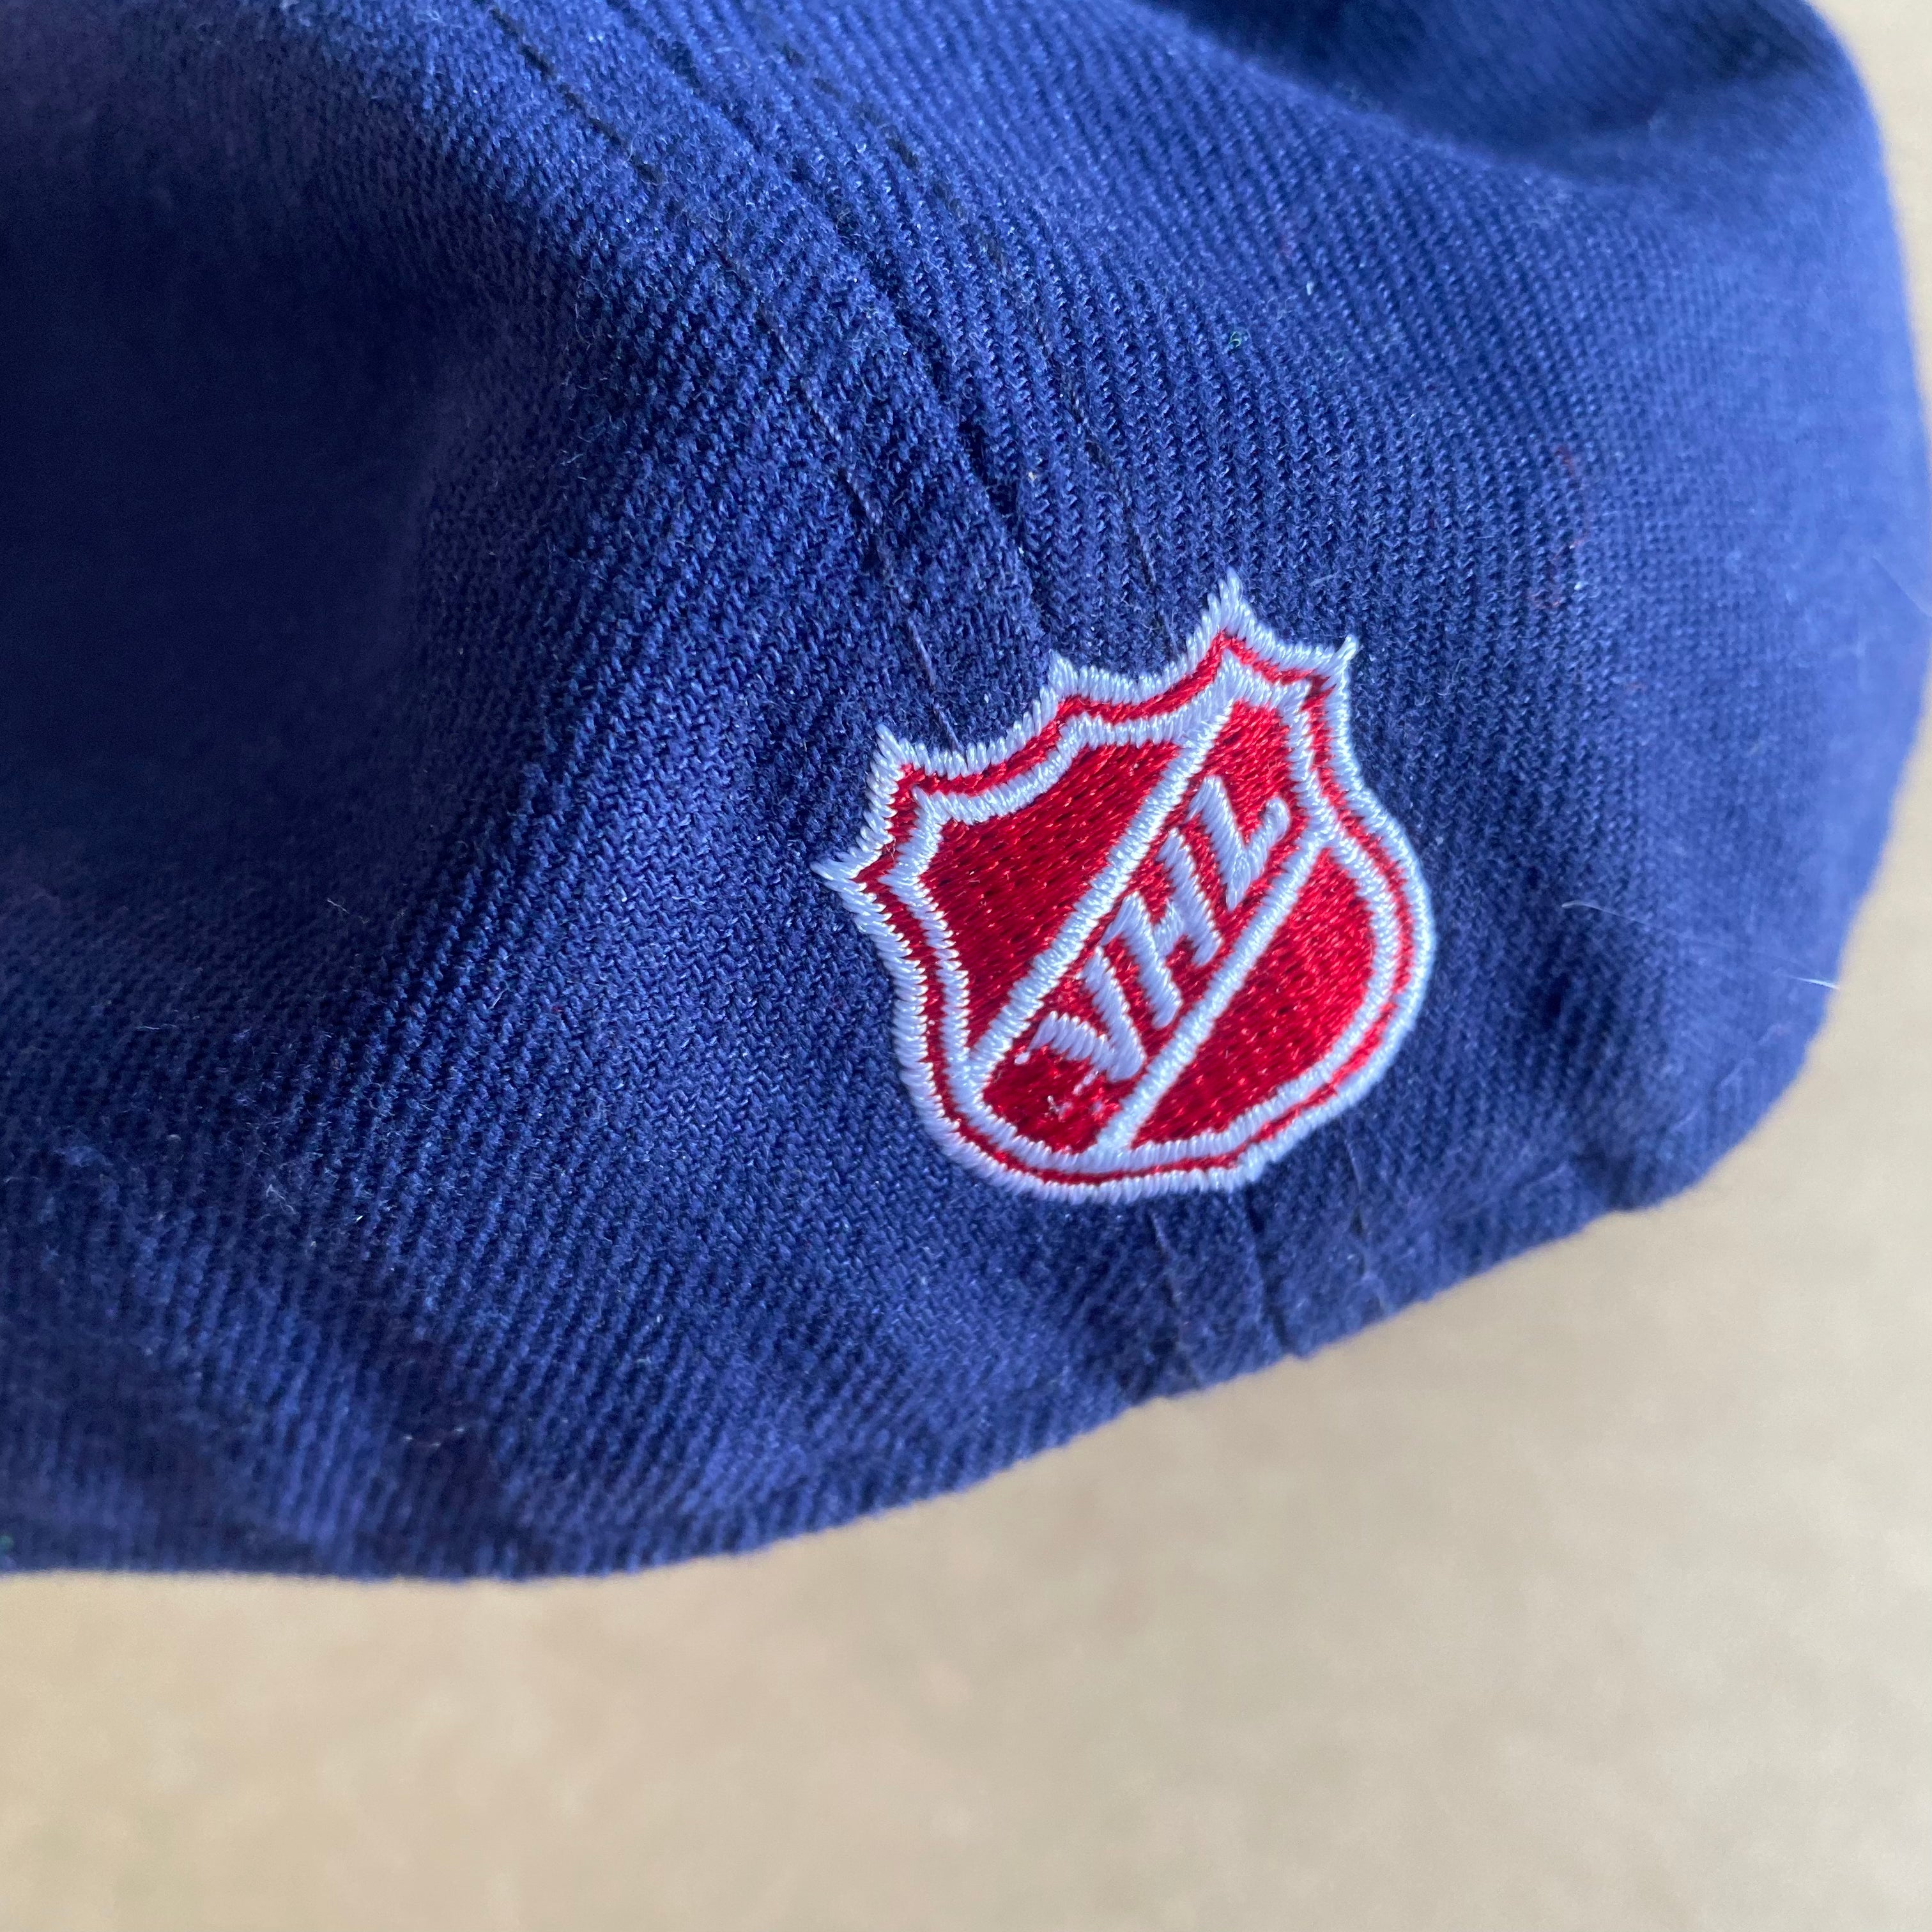 Secondhand New Era Columbus Blue Jackets Hat